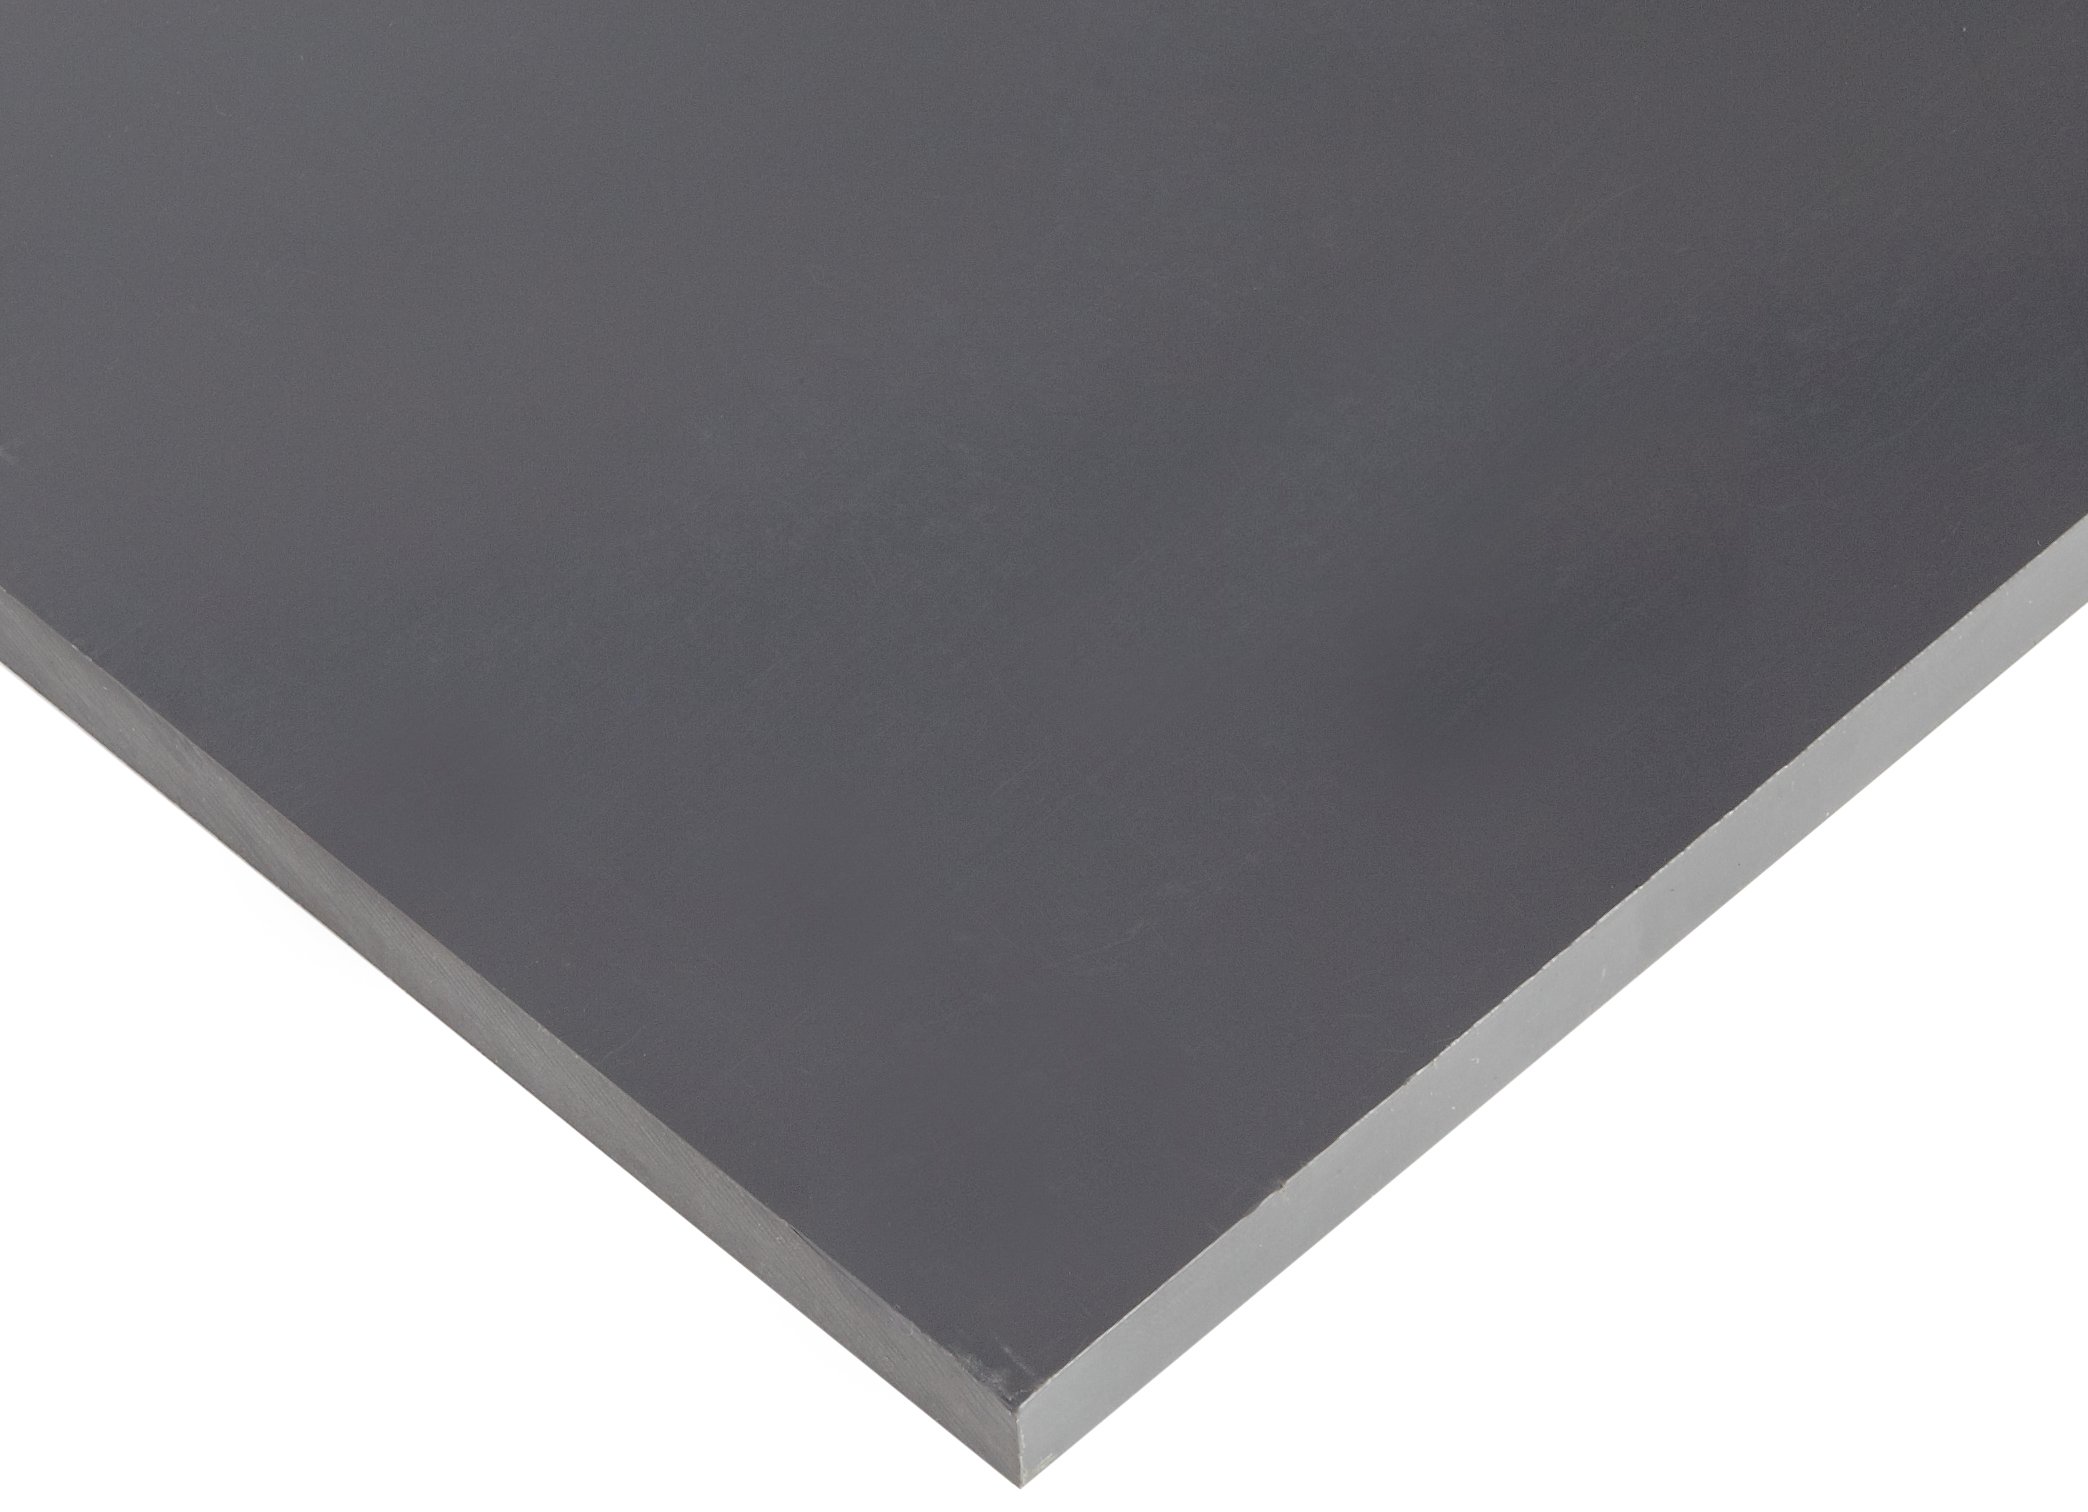 GRAY PVC BAR  machinable plastic flat sheet stock 1/4" x 6" x 12" OAL 